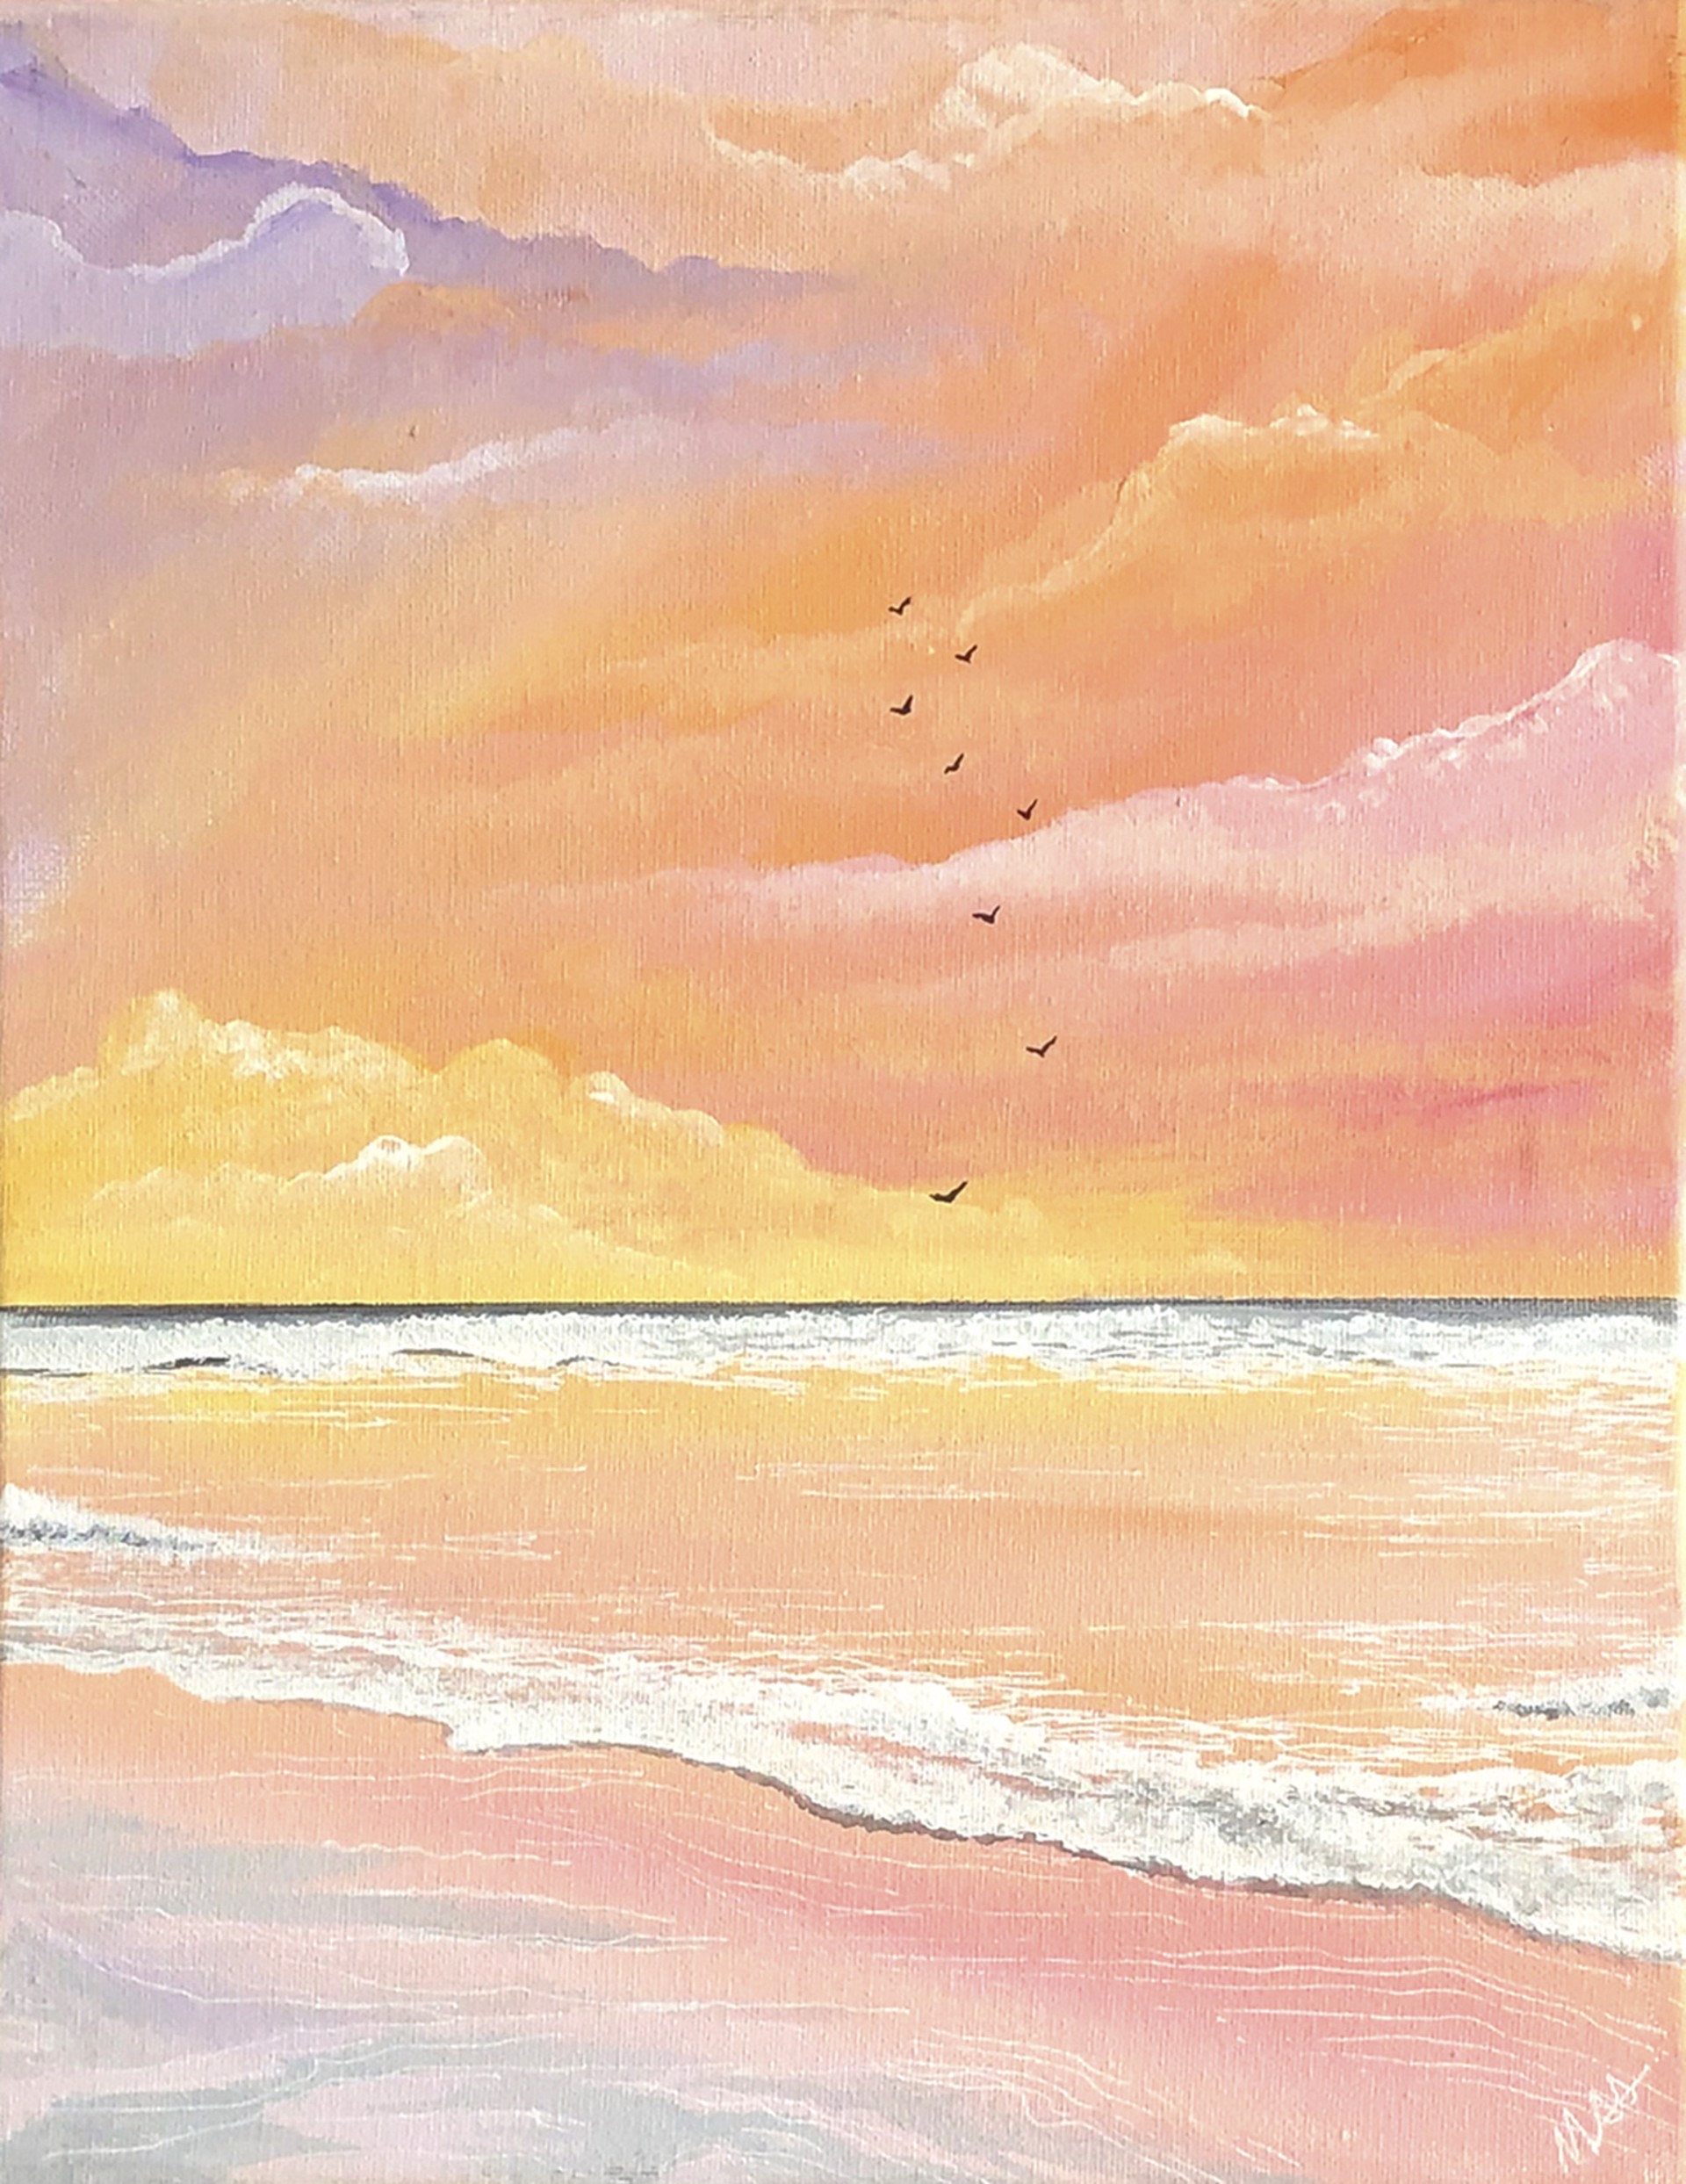 Sunset at the beach by Marina Alves